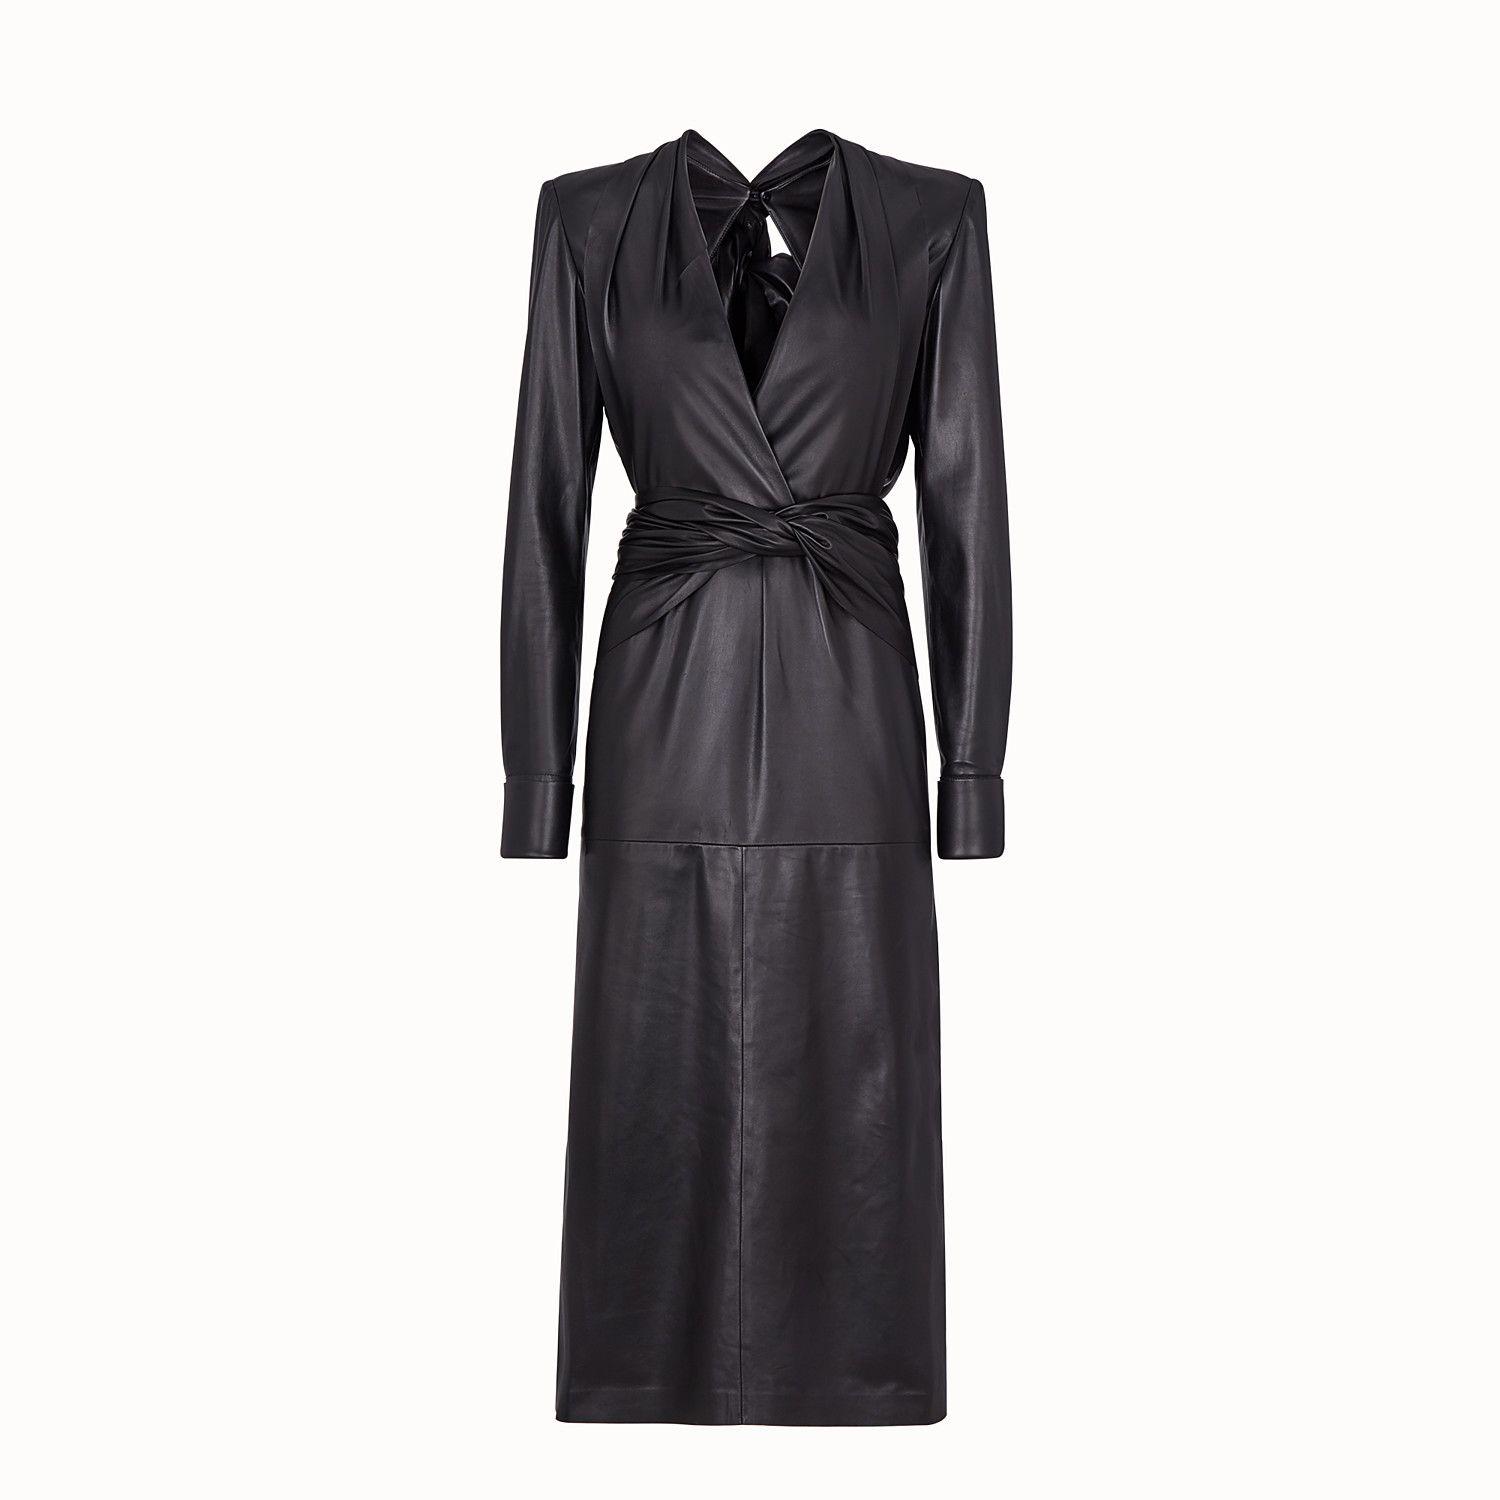 Fendi Leather Dress in Black - Lyst